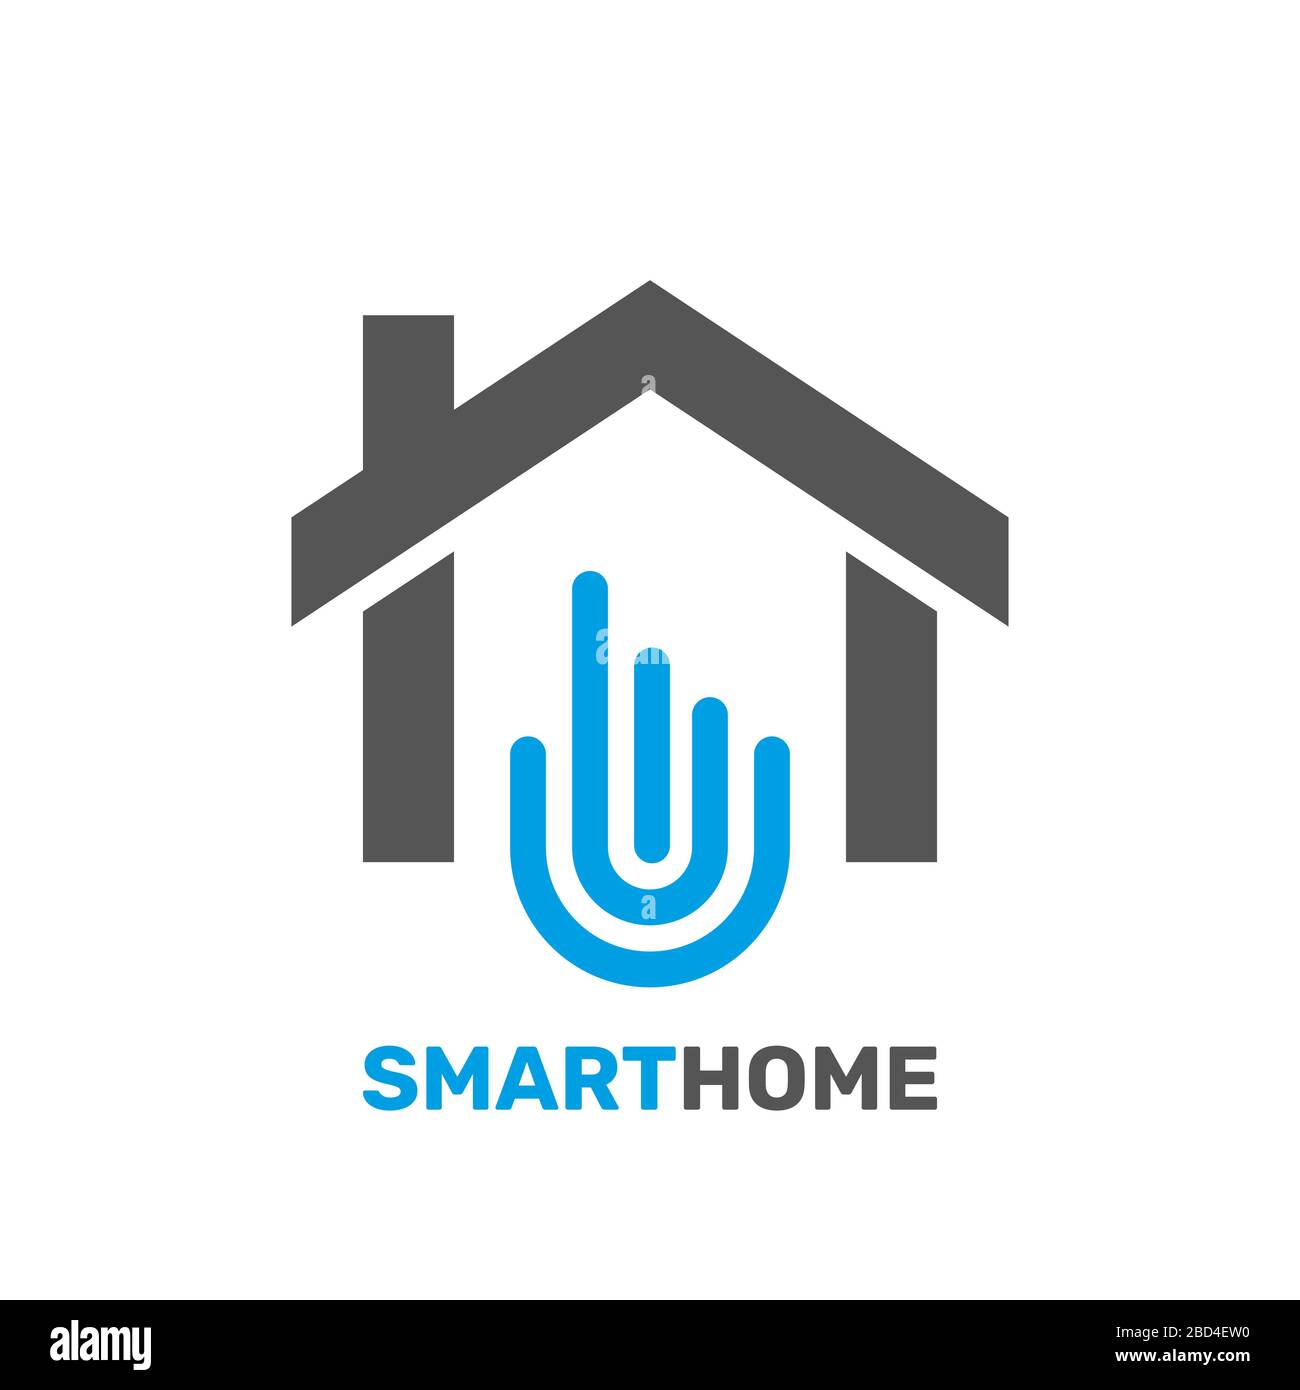 Smart Home Emblem für digitale Technologien. Vektorgrafiken. EPS 10. Stock Vektor